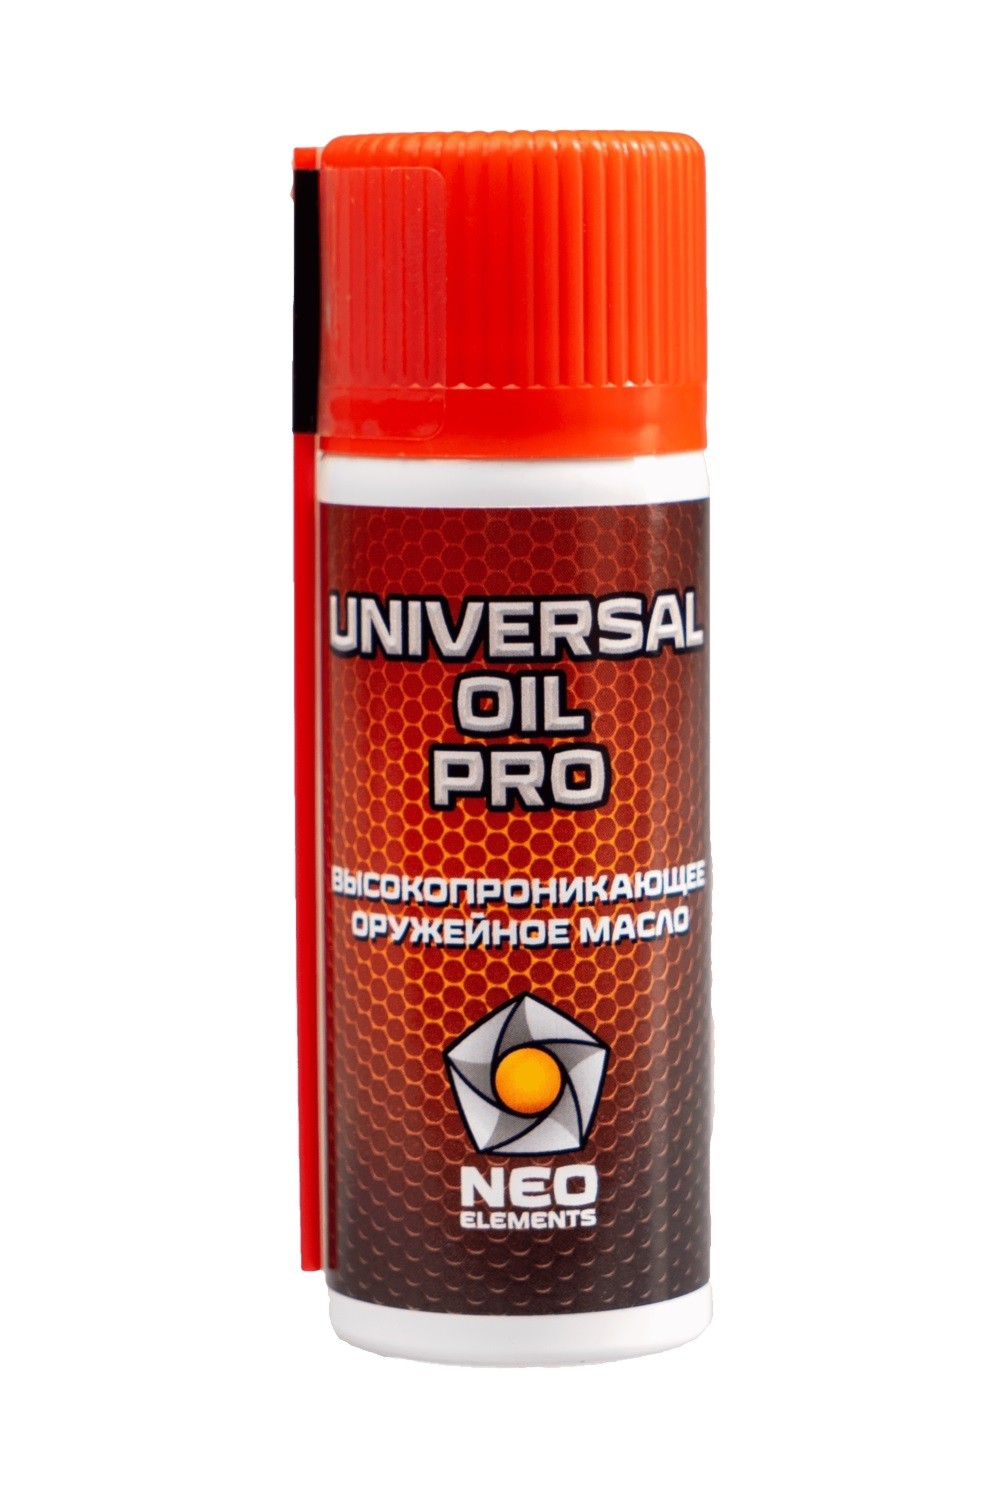 Масло Neo Elements Universal oil pro оружейное 75мл - фото 1